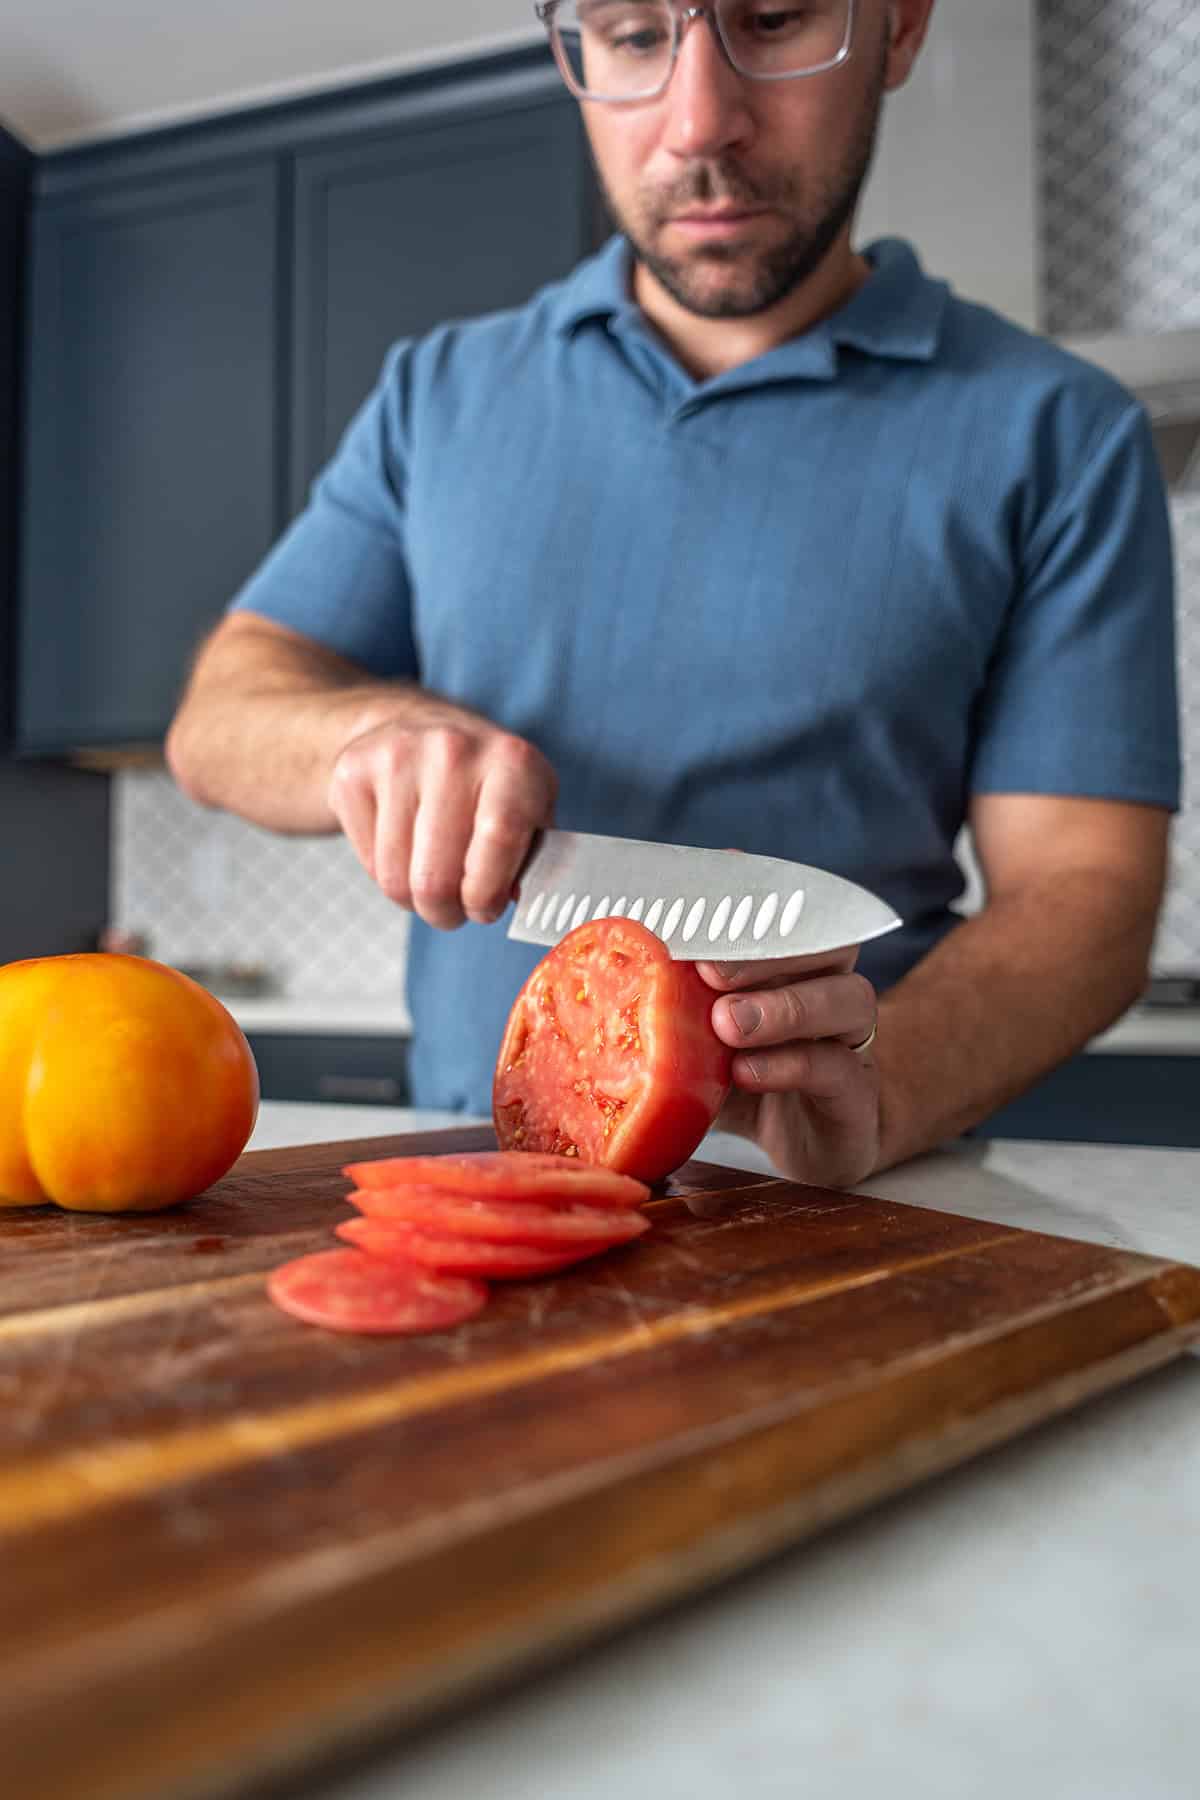 Vinny slicing tomatoes